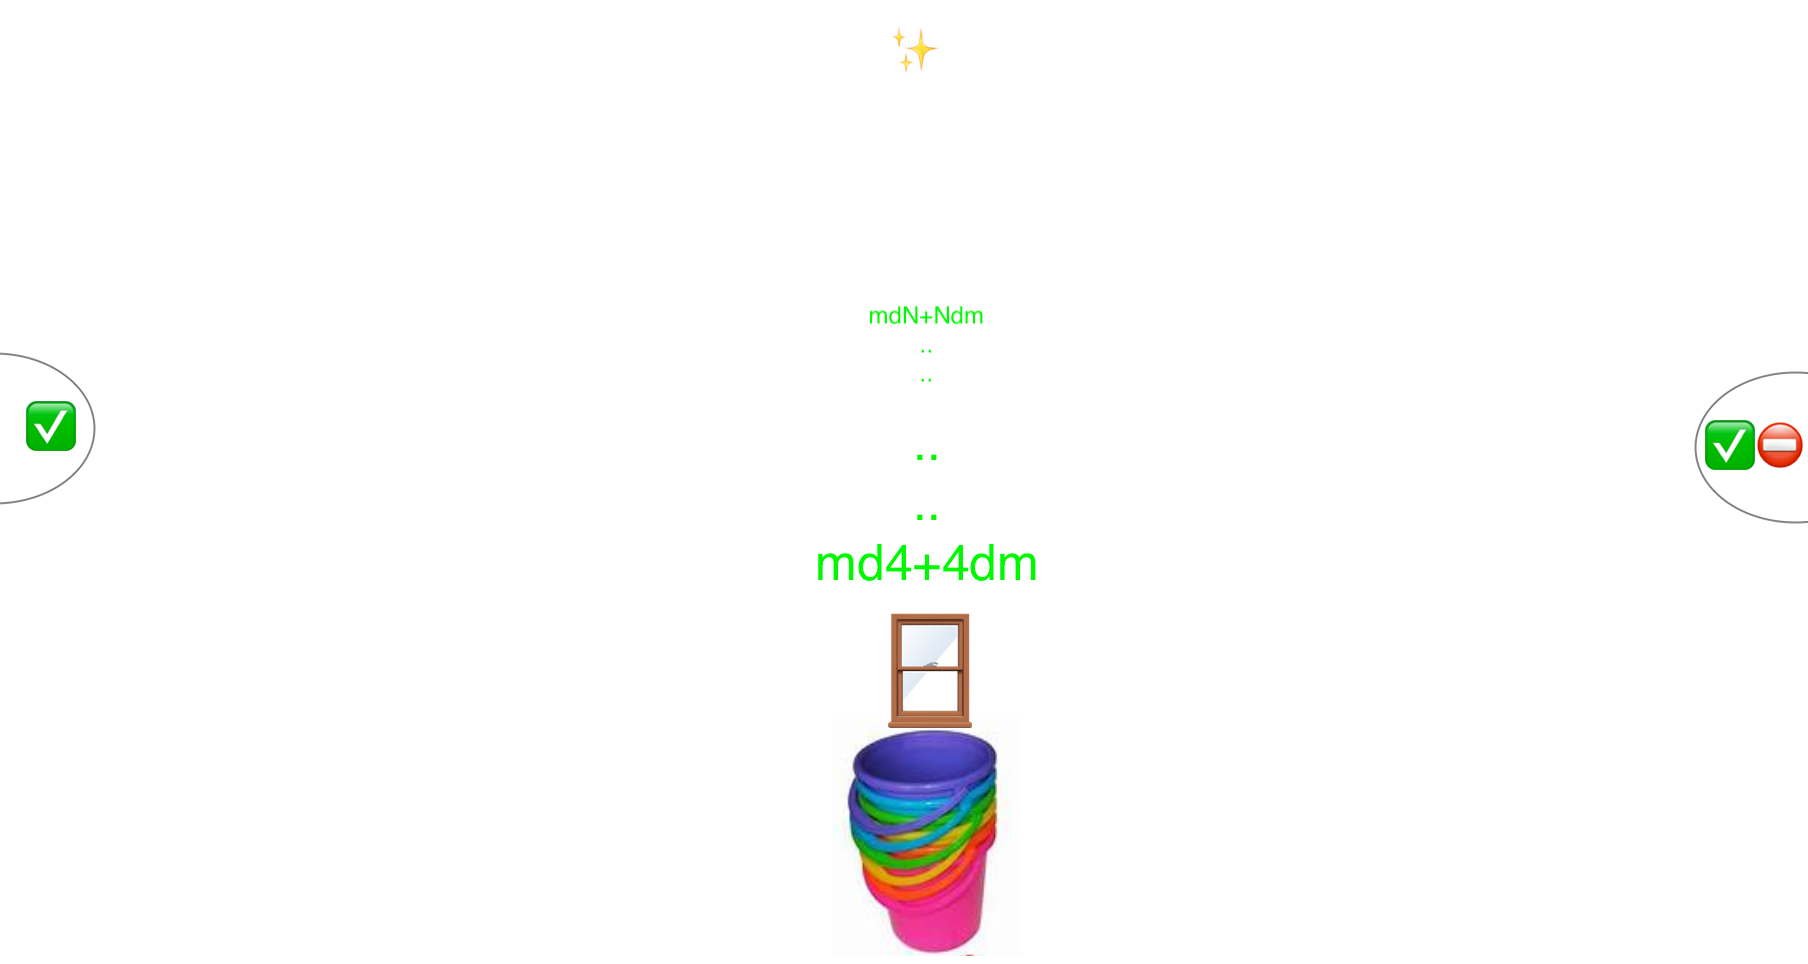 mdnplusndm version 2